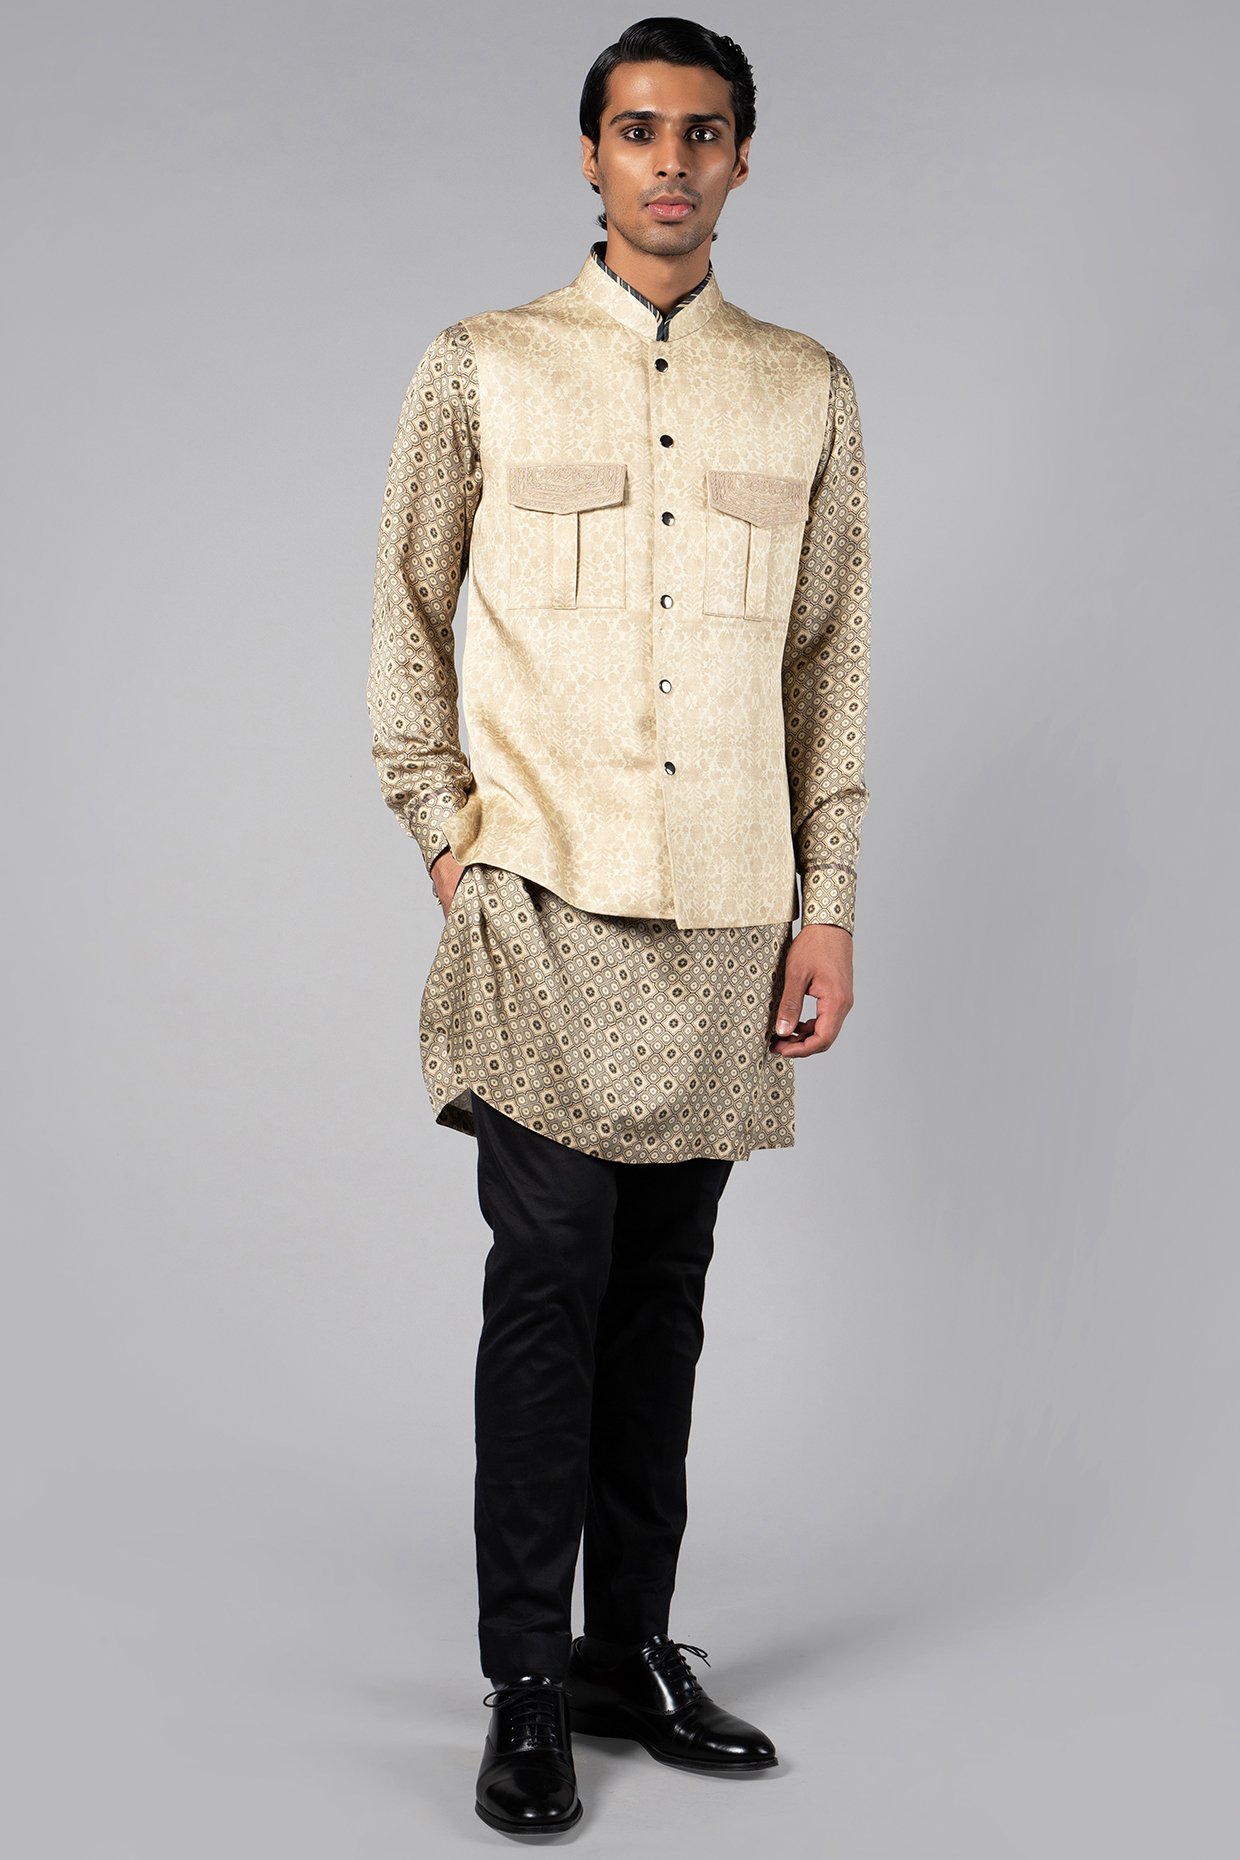 Treemoda Grey Plain Nehru Jacket for Men Stylish Latest Design Suitable for Ethnic  Wear - Treemoda - 3987145